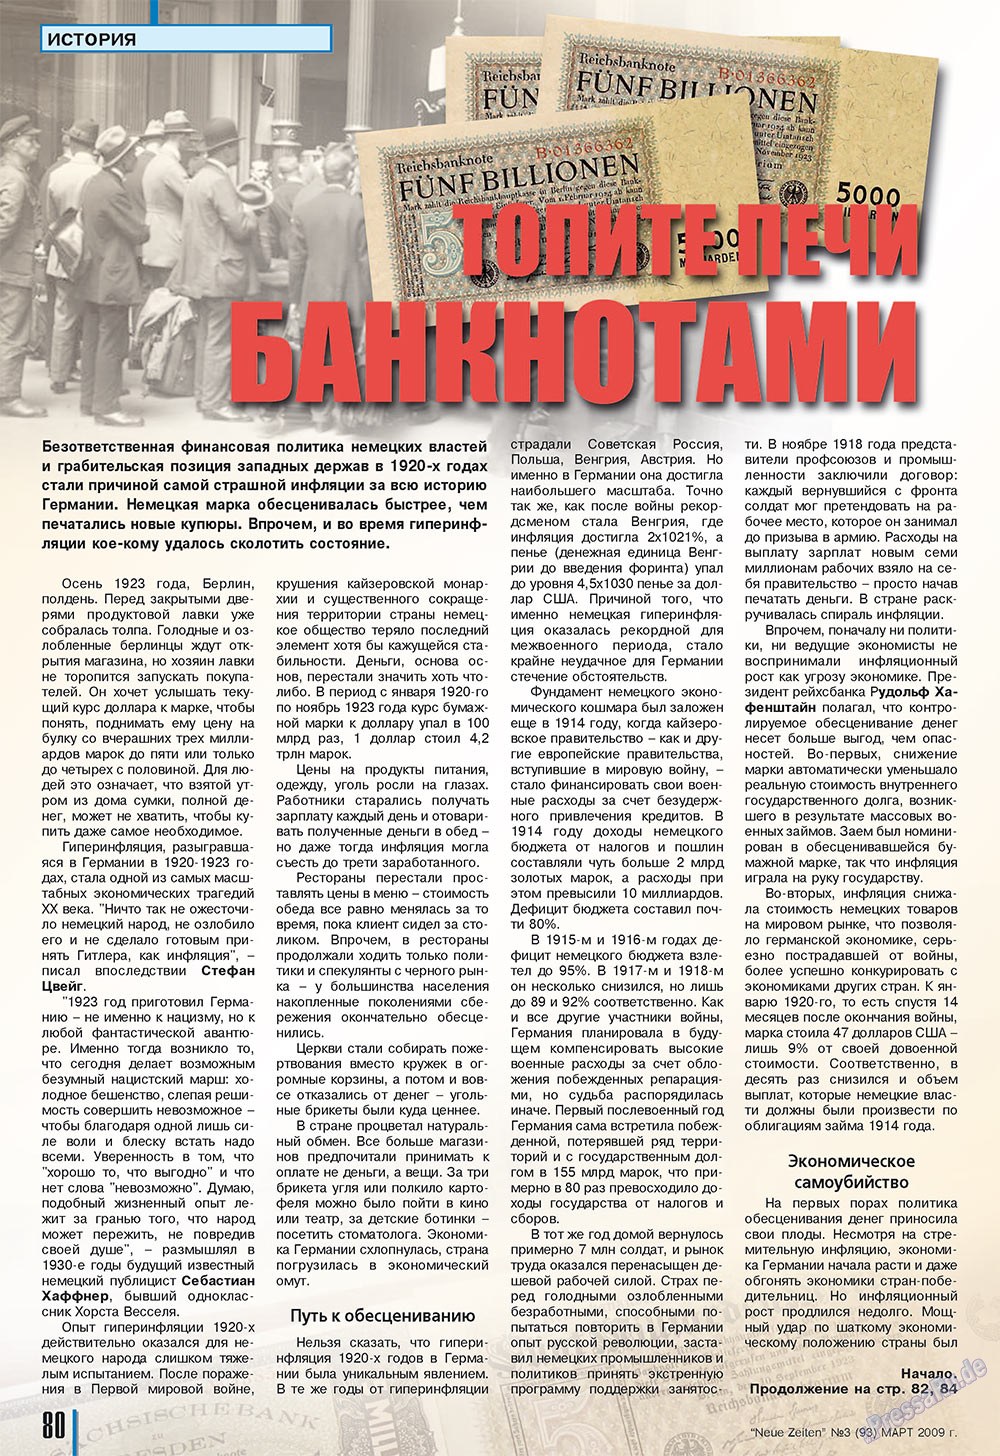 Neue Zeiten (журнал). 2009 год, номер 3, стр. 80